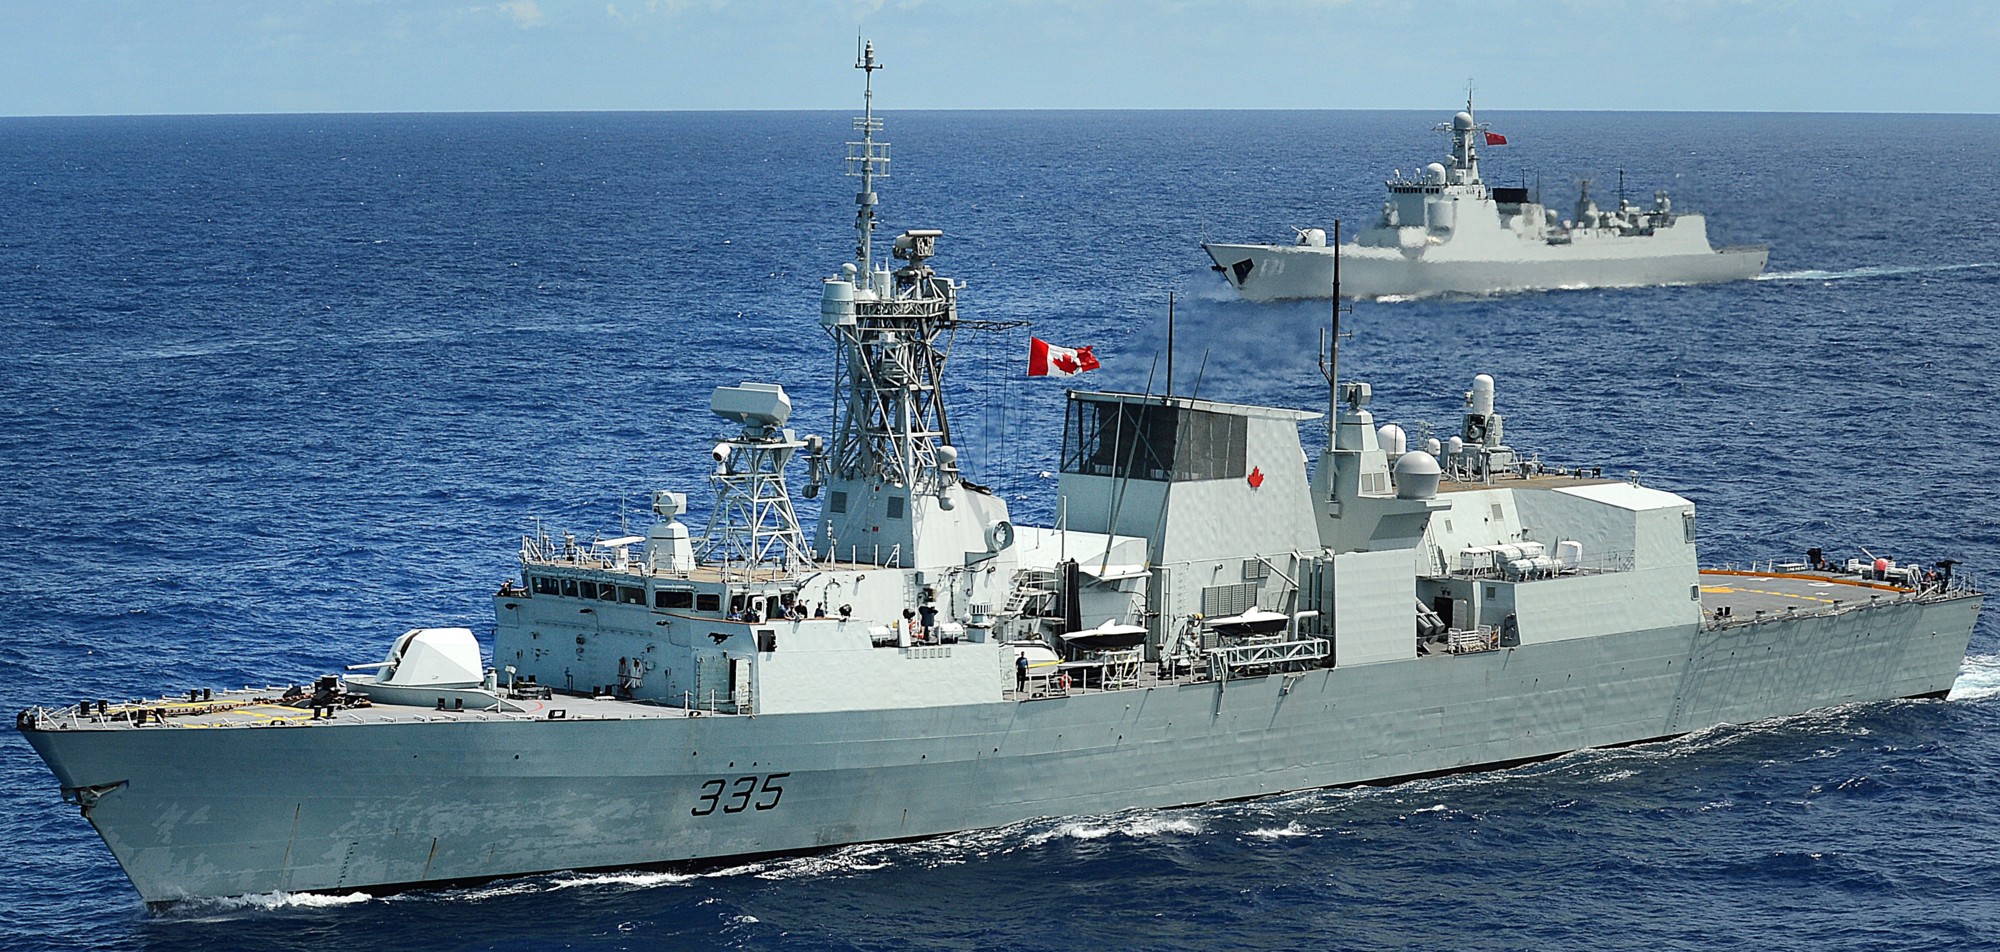 ffh-335 hmcs calgary halifax class helicopter patrol frigate ncsm royal canadian navy 09